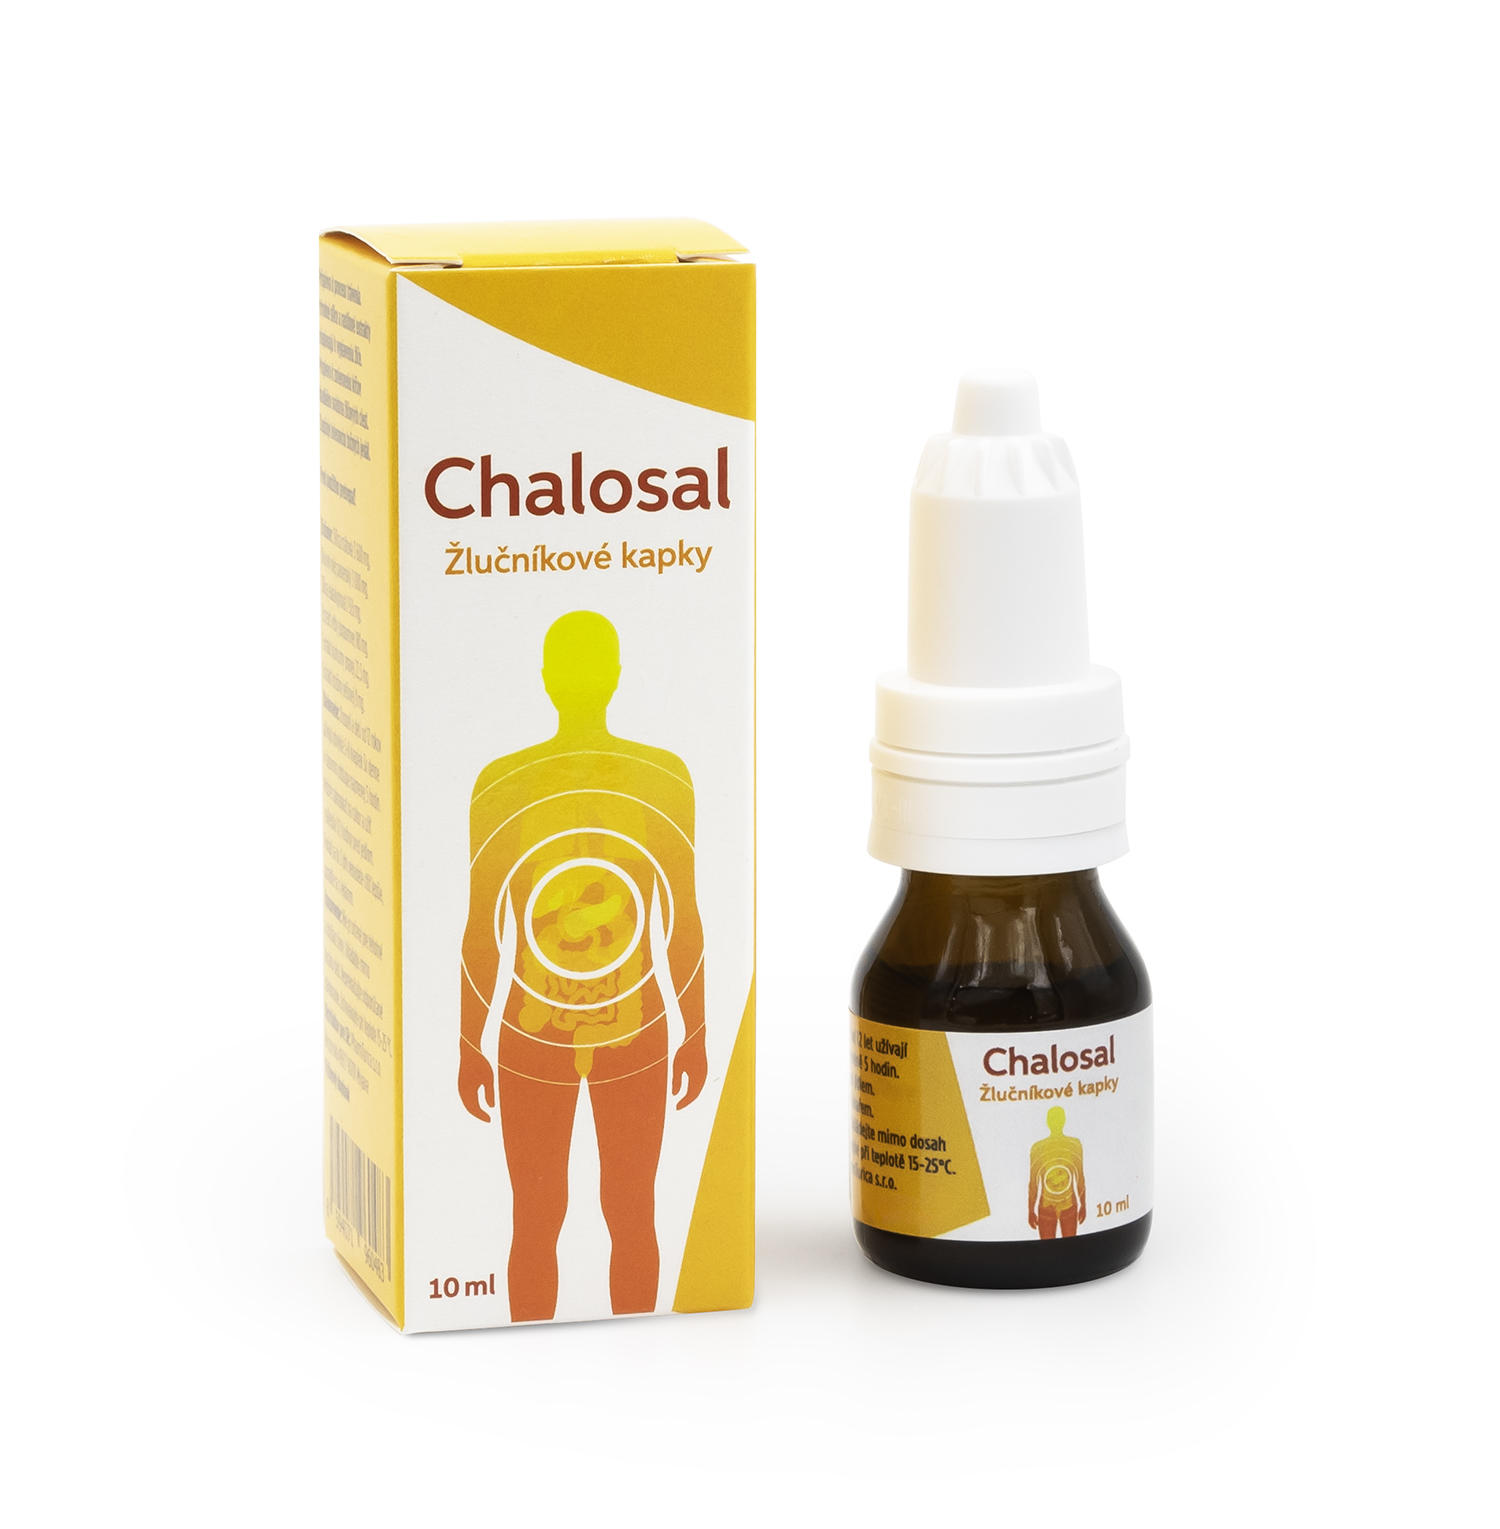 Chalosal - Gallbladder drops